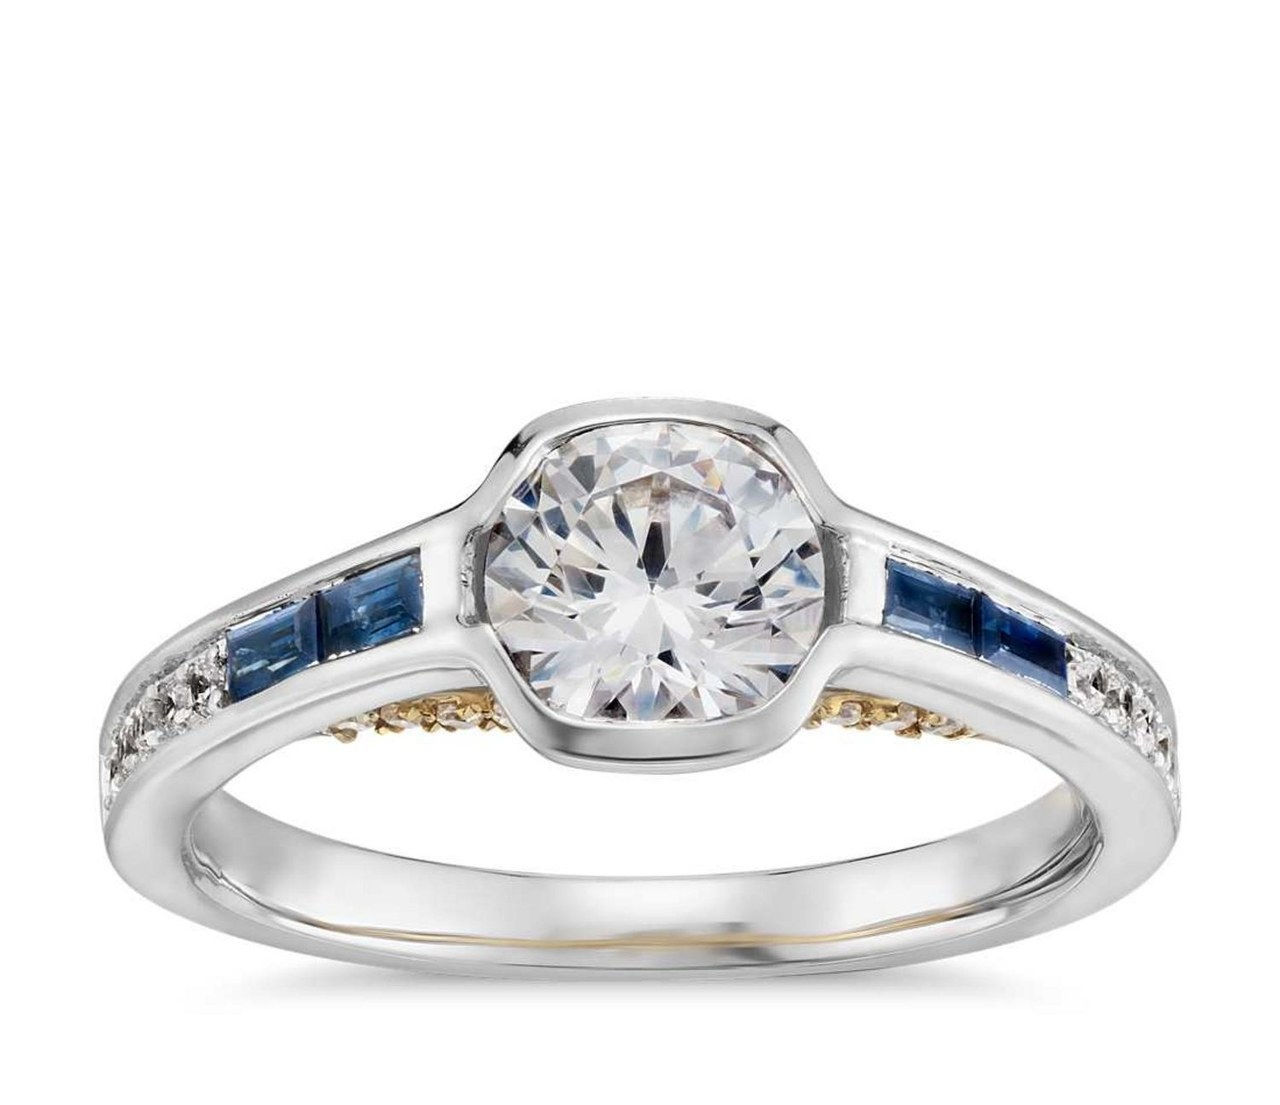 8 zac posen blue nile truly zac posen diamond engagement rings 1113